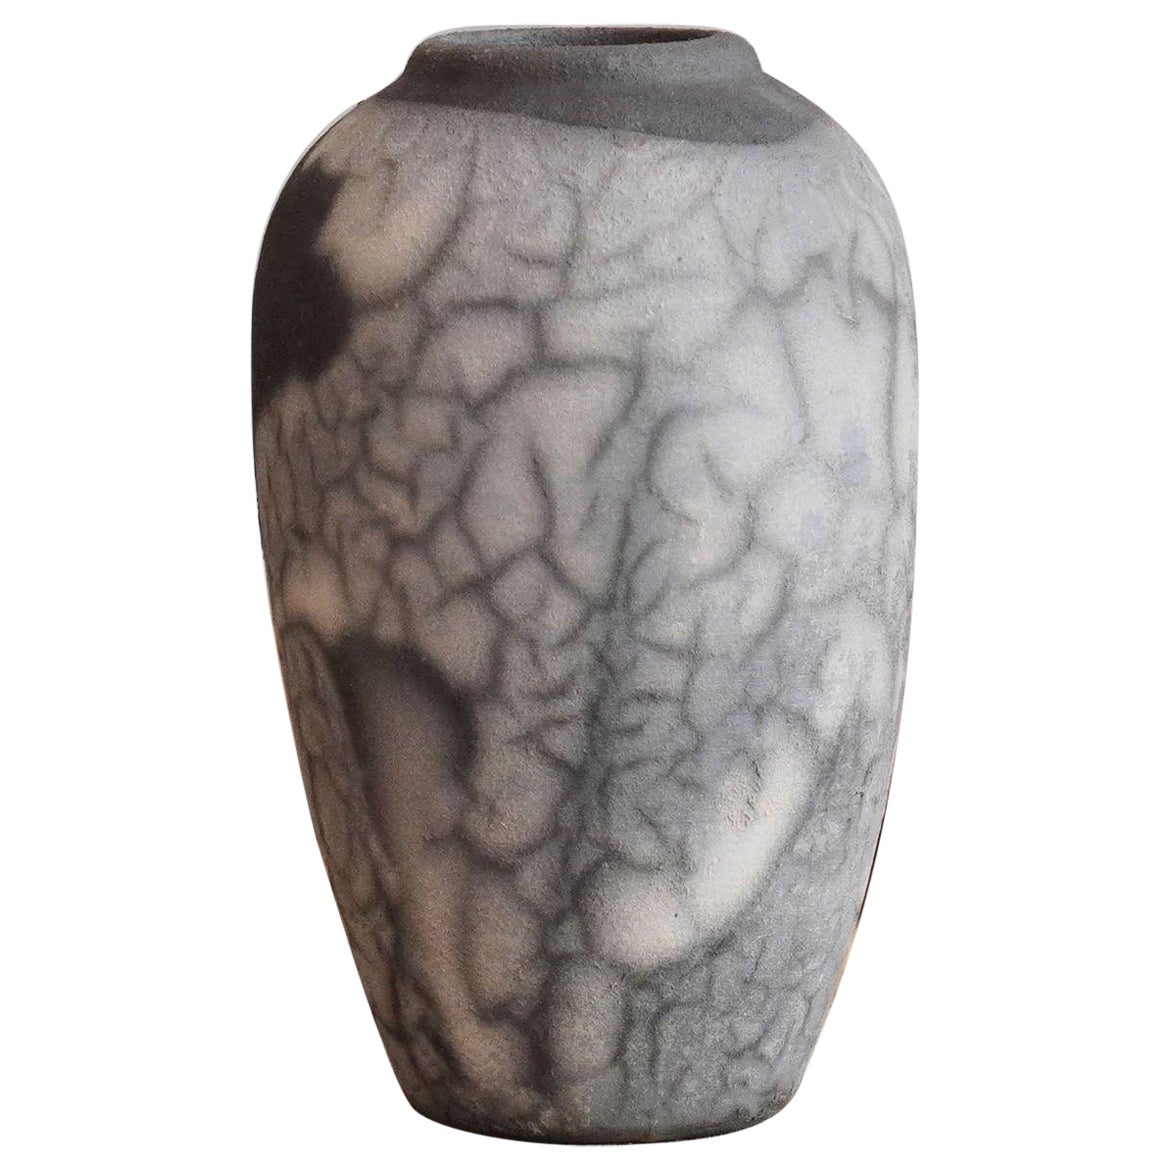 Hana L Mini Vase Raku Ceramic, Smoked Raku, Handmade Home Decor Gift For Sale